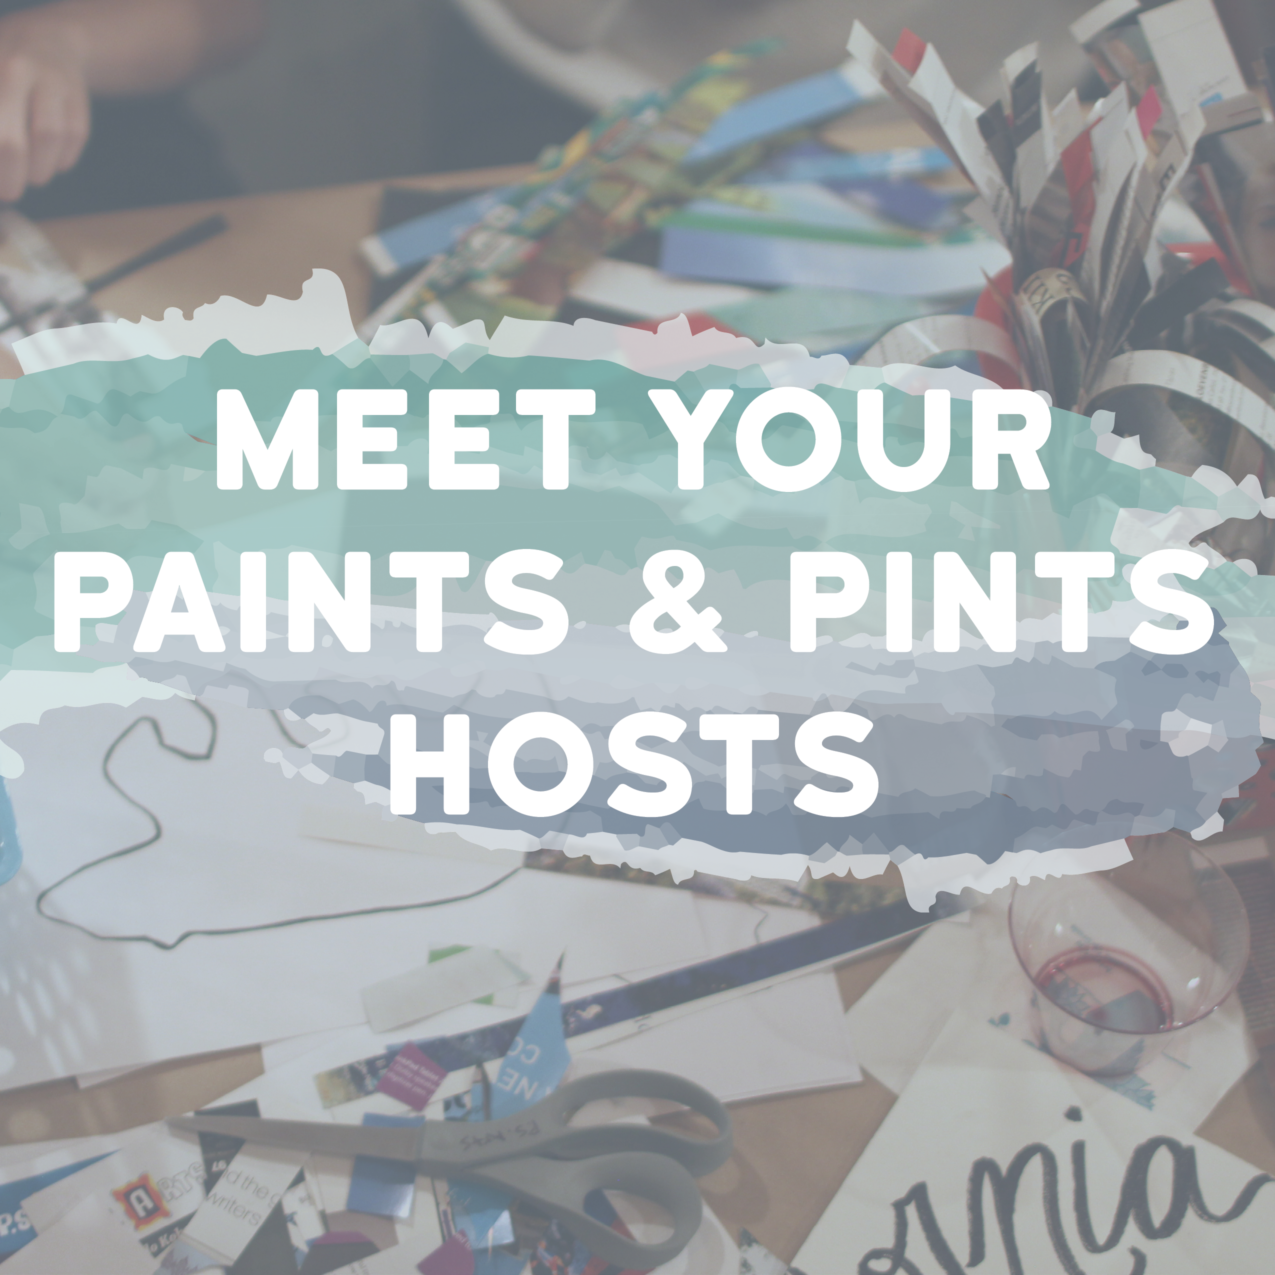 P.S. Arts Spotlight on Paints & Pints Hosts!